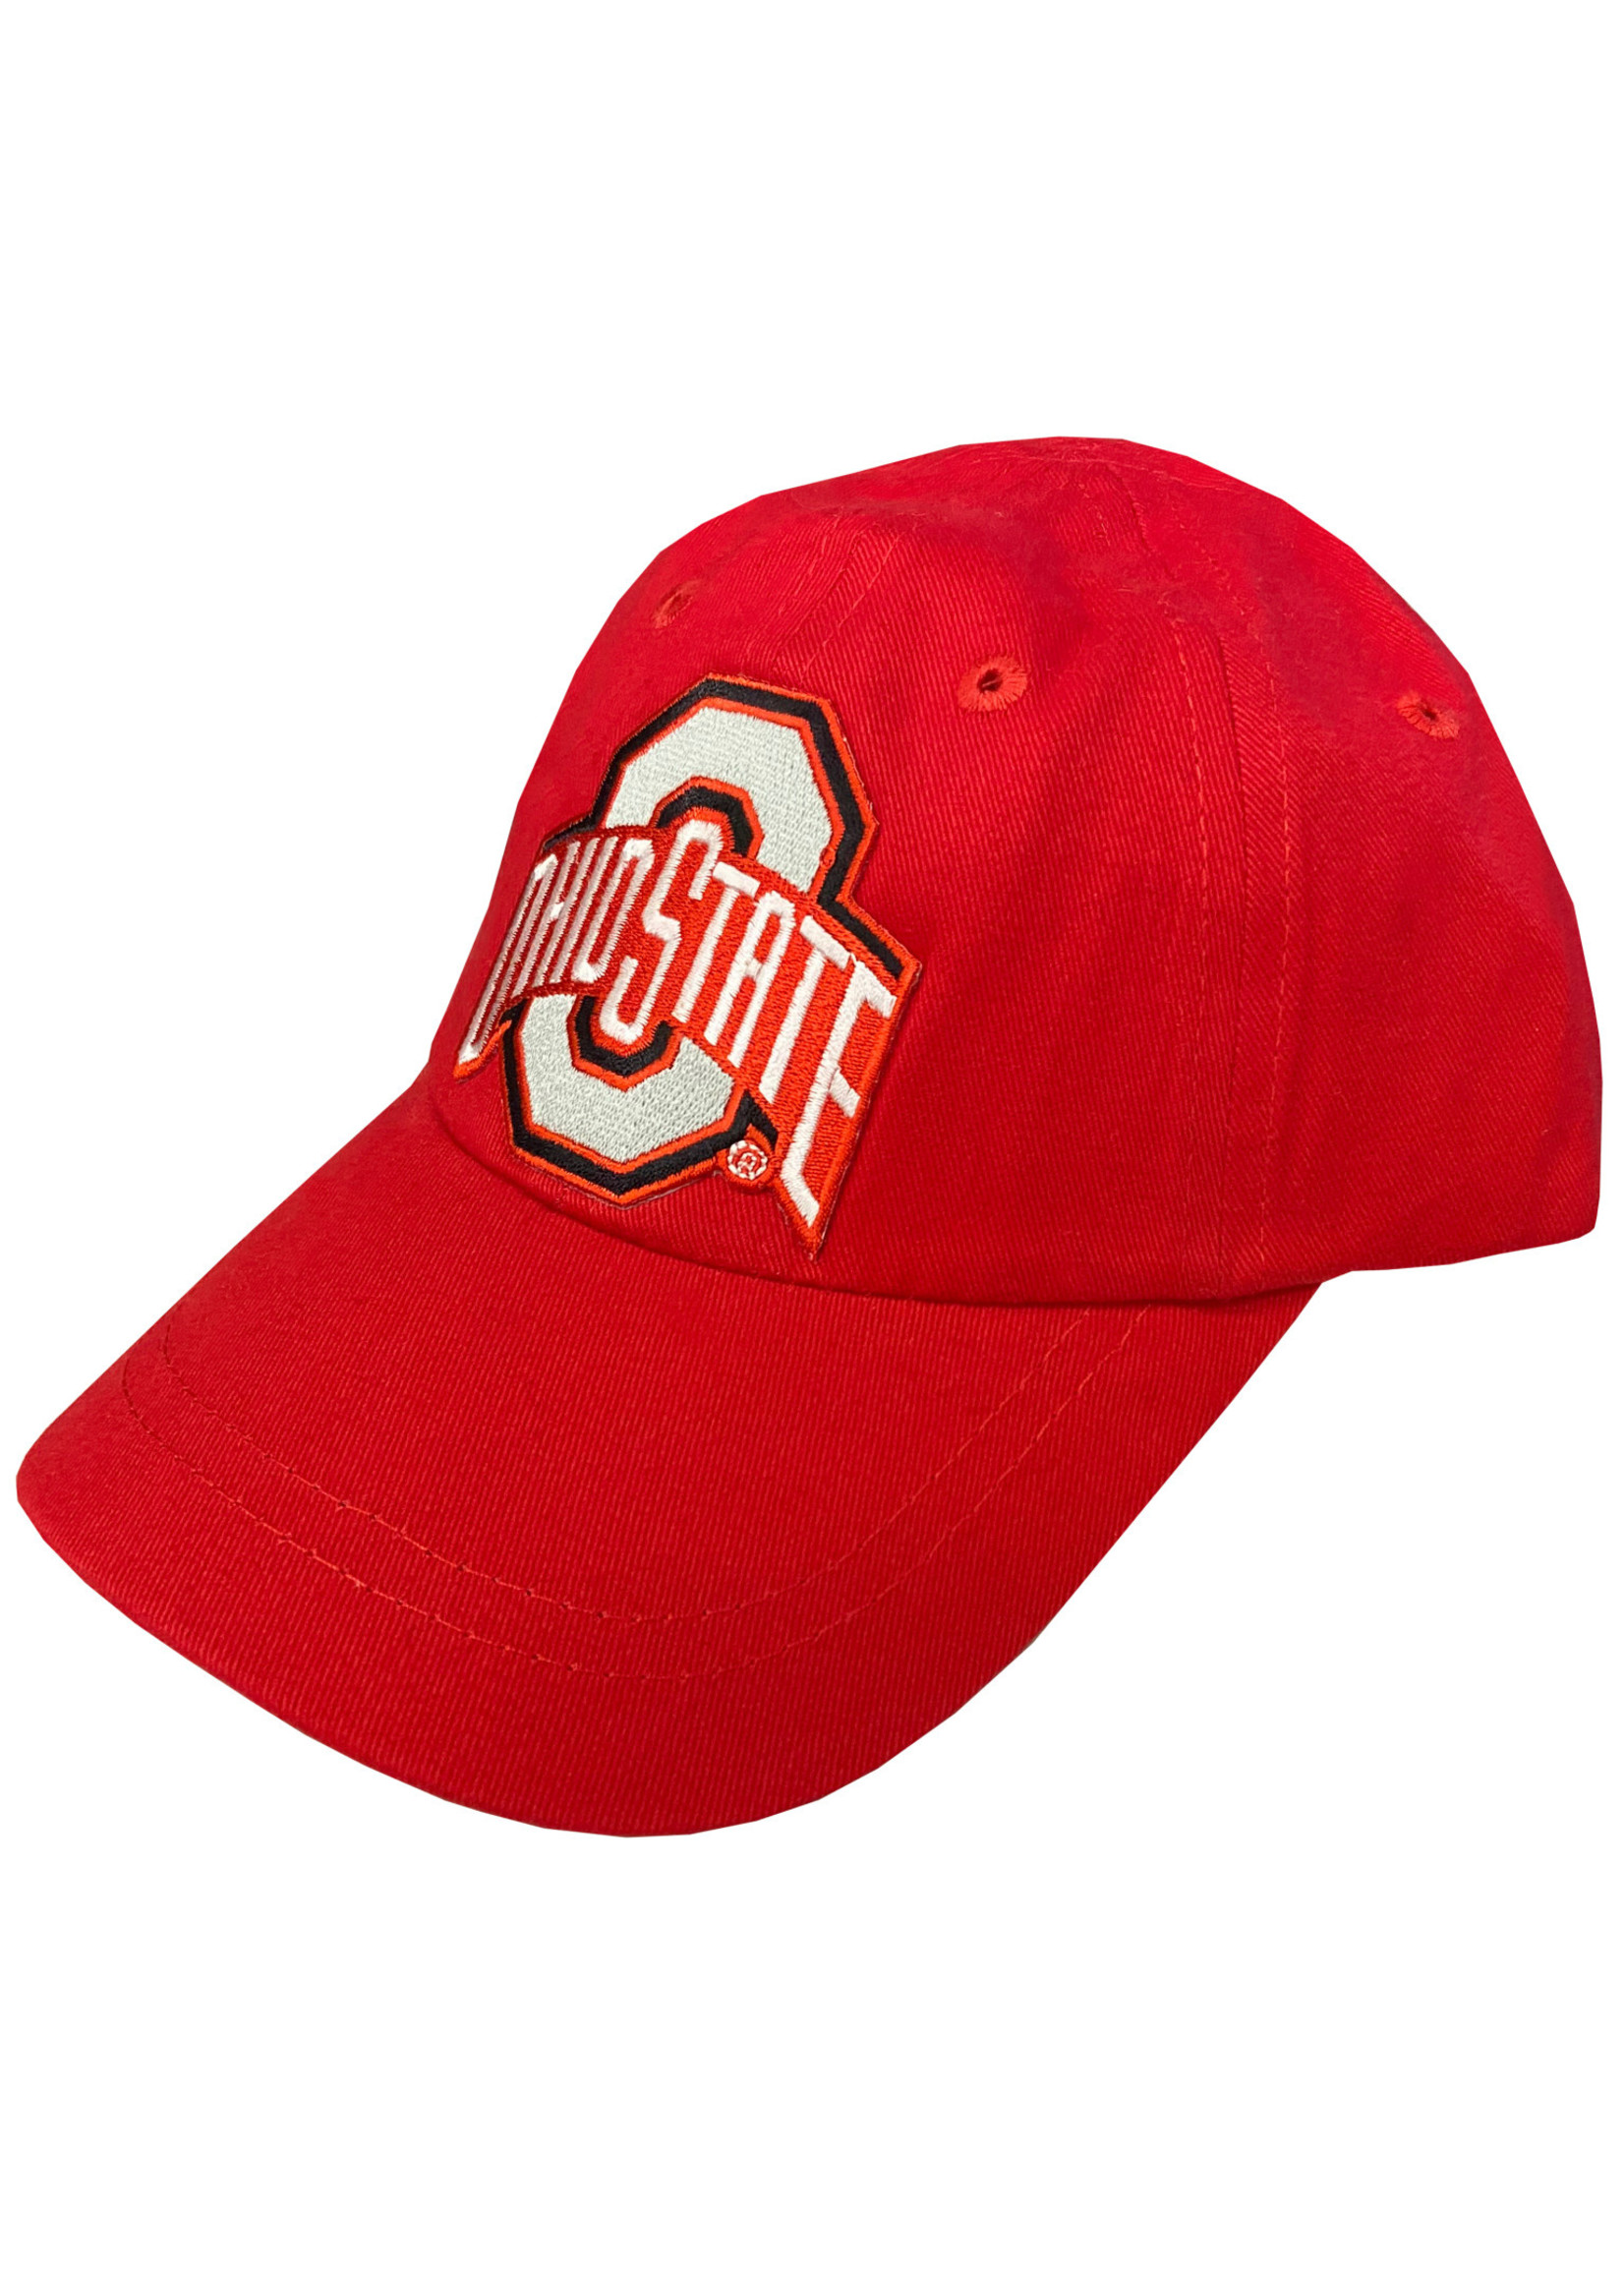 Ohio State Buckeyes Toddler Adjustable Hat